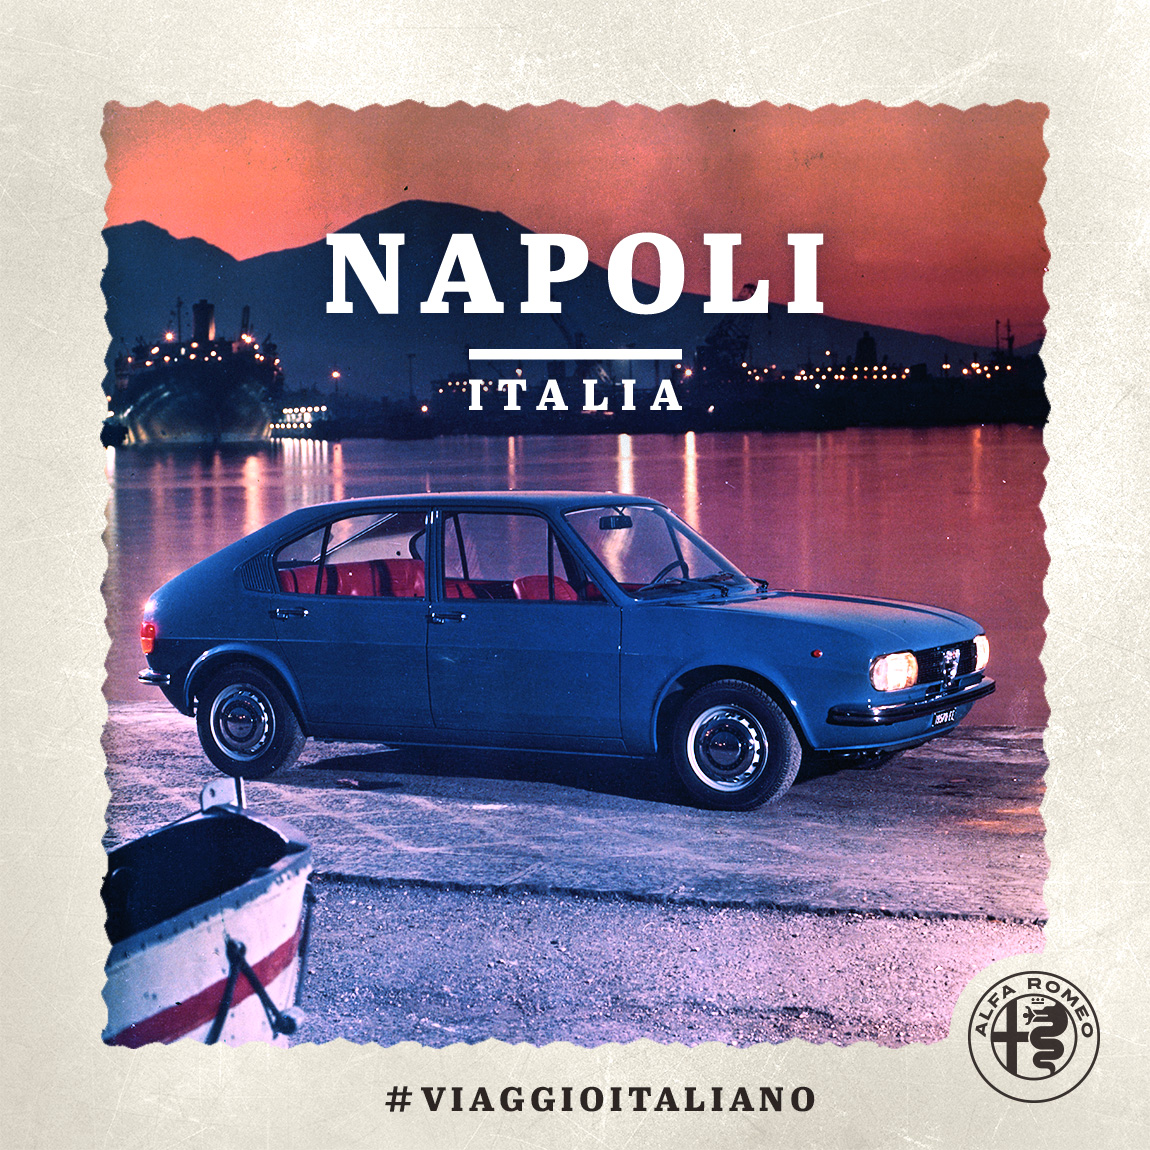 Image of an Alfa Romeo car in Naples